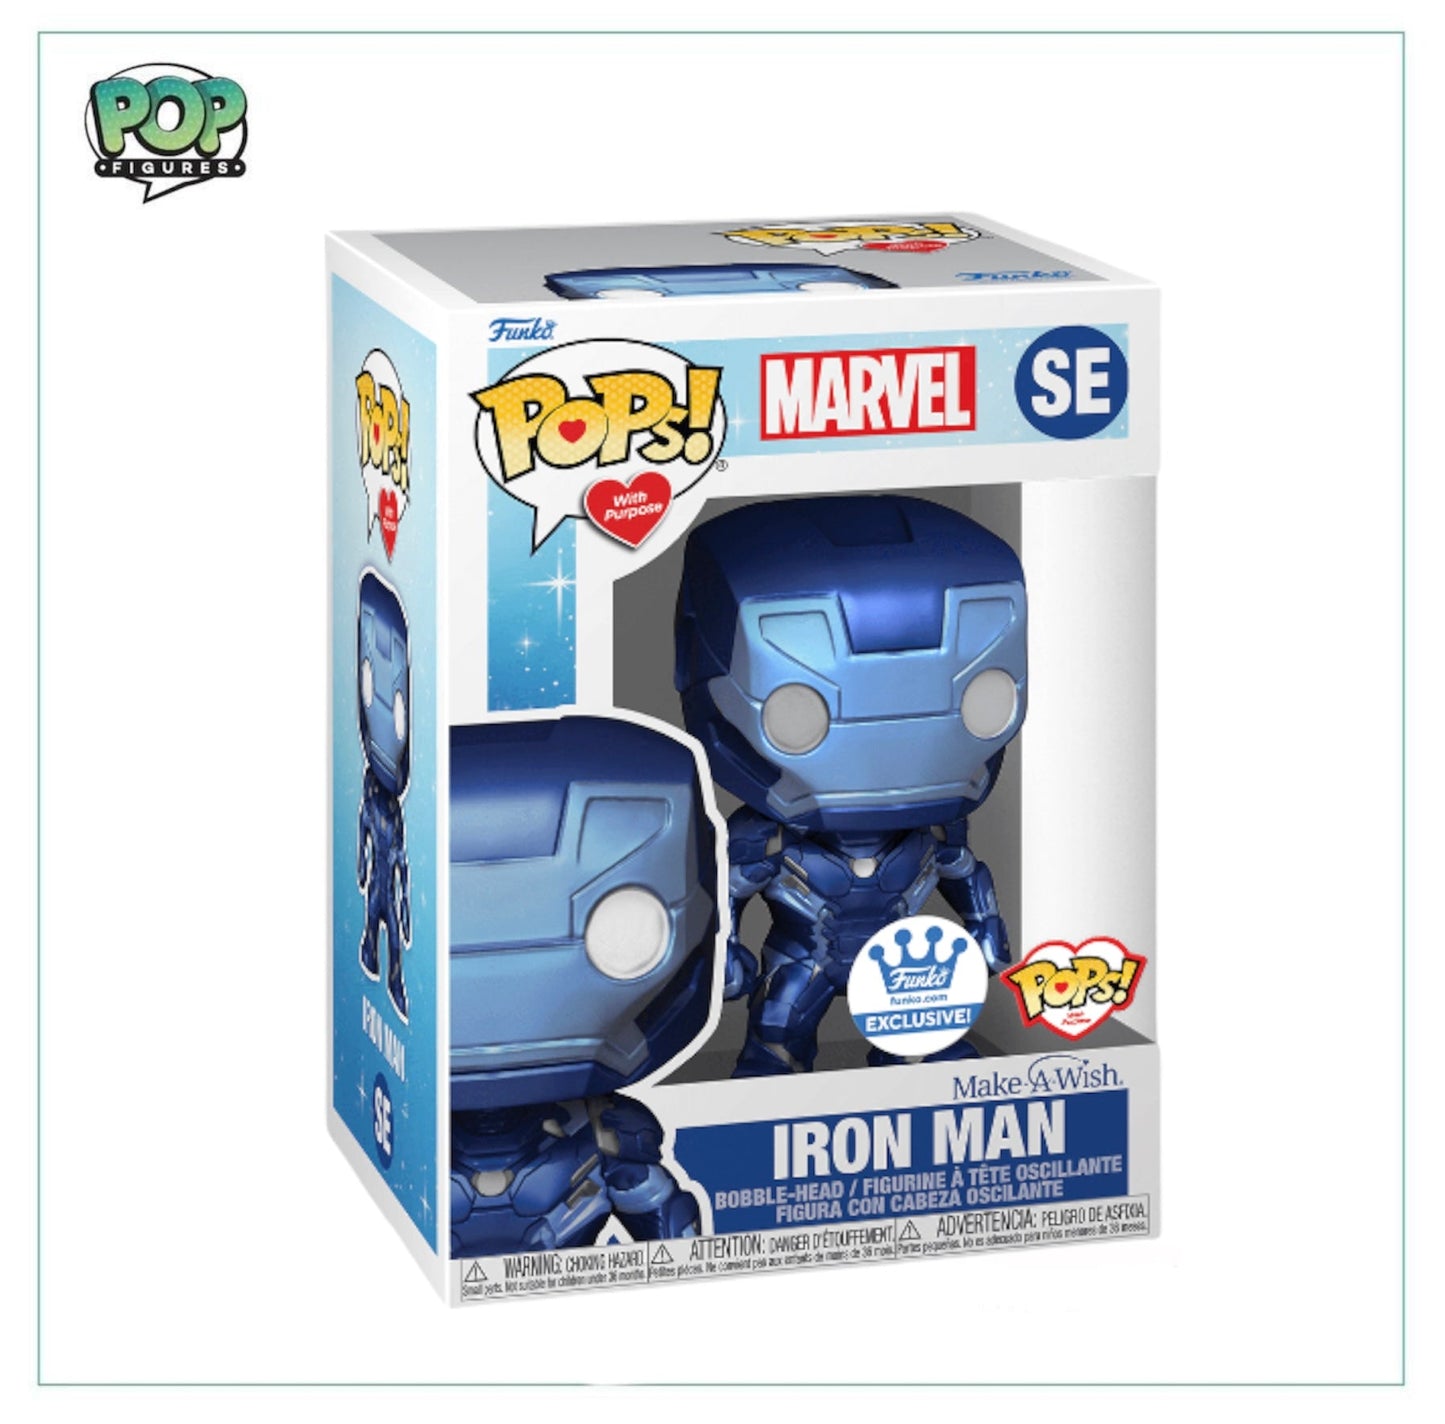 Iron Man #SE Funko Pop! Marvel - Funko Exclusive -  Make A Wish - Angry Cat